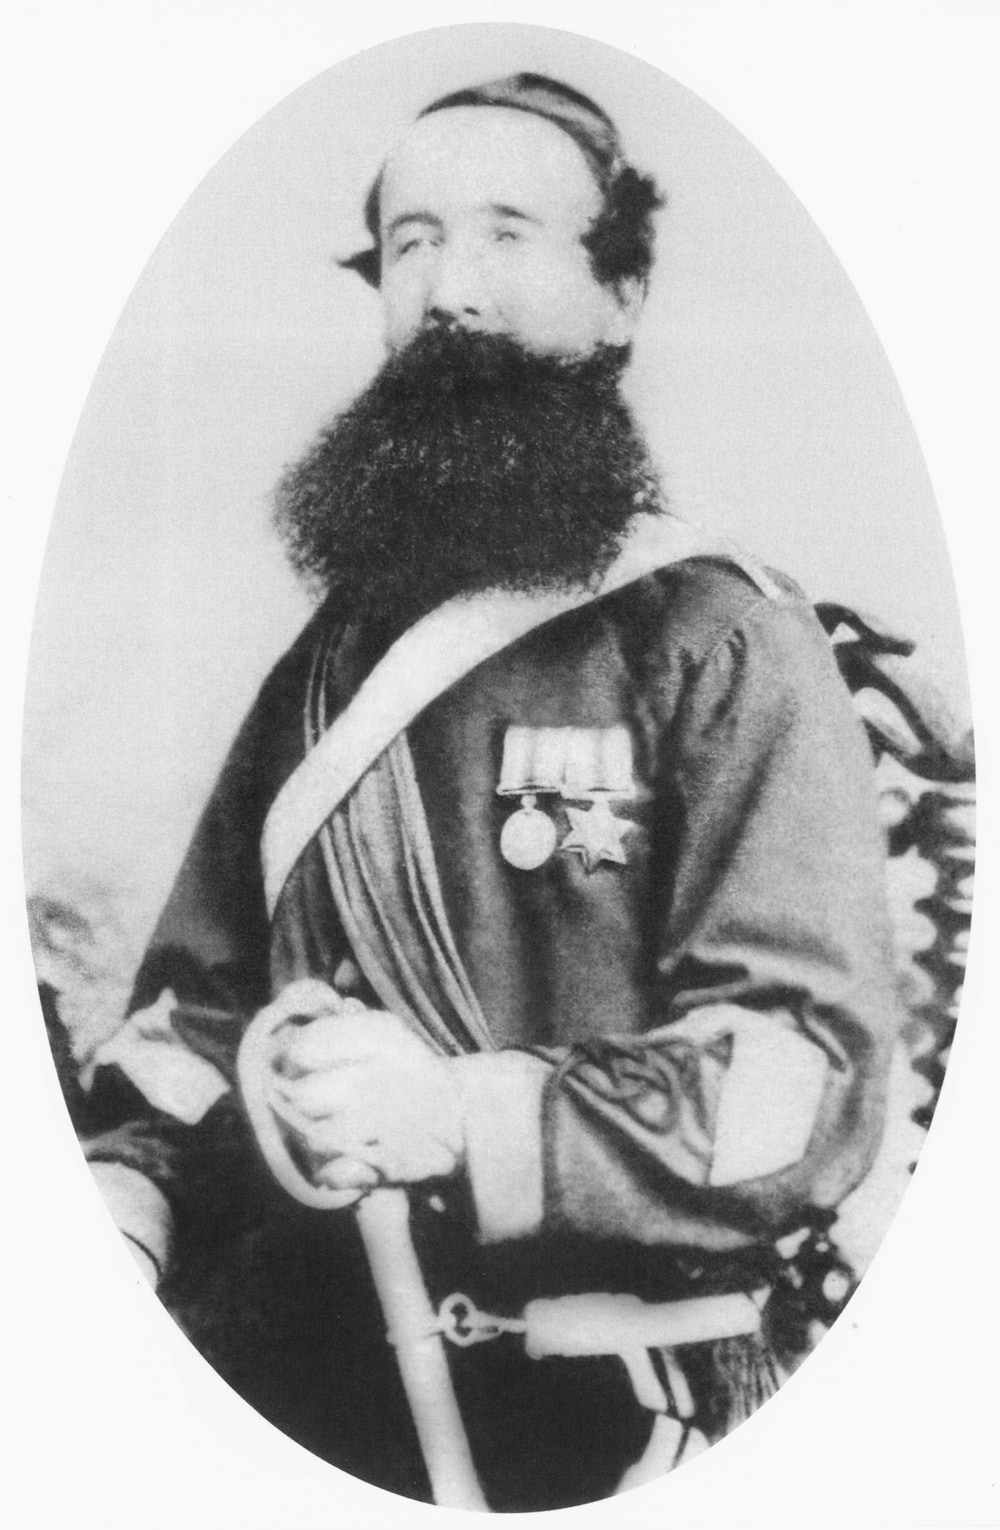 Joseph Foster, c. mid 1860s